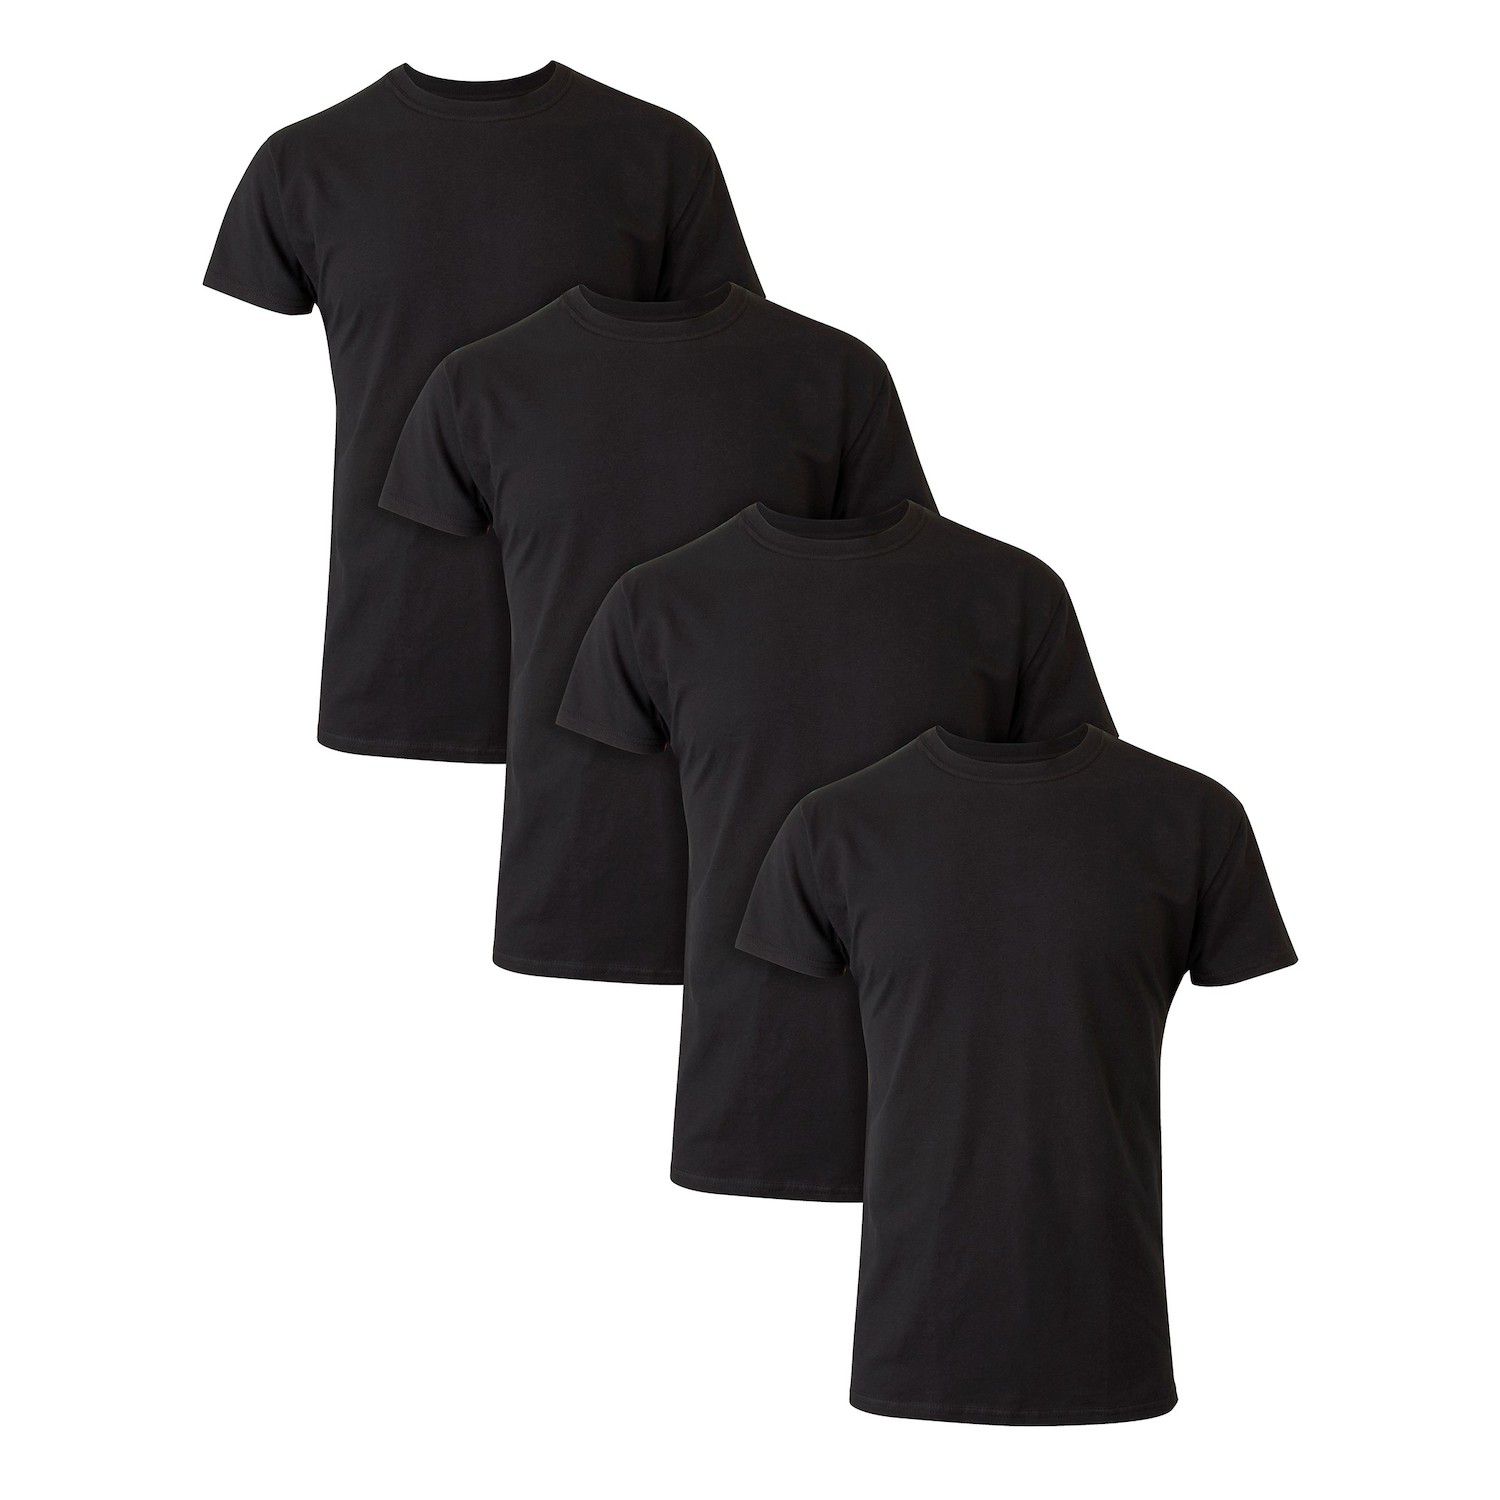 Big & Tall Ultimate Cool Comfort FreshIQ футболки с круглым вырезом, набор из 4 шт. Hanes